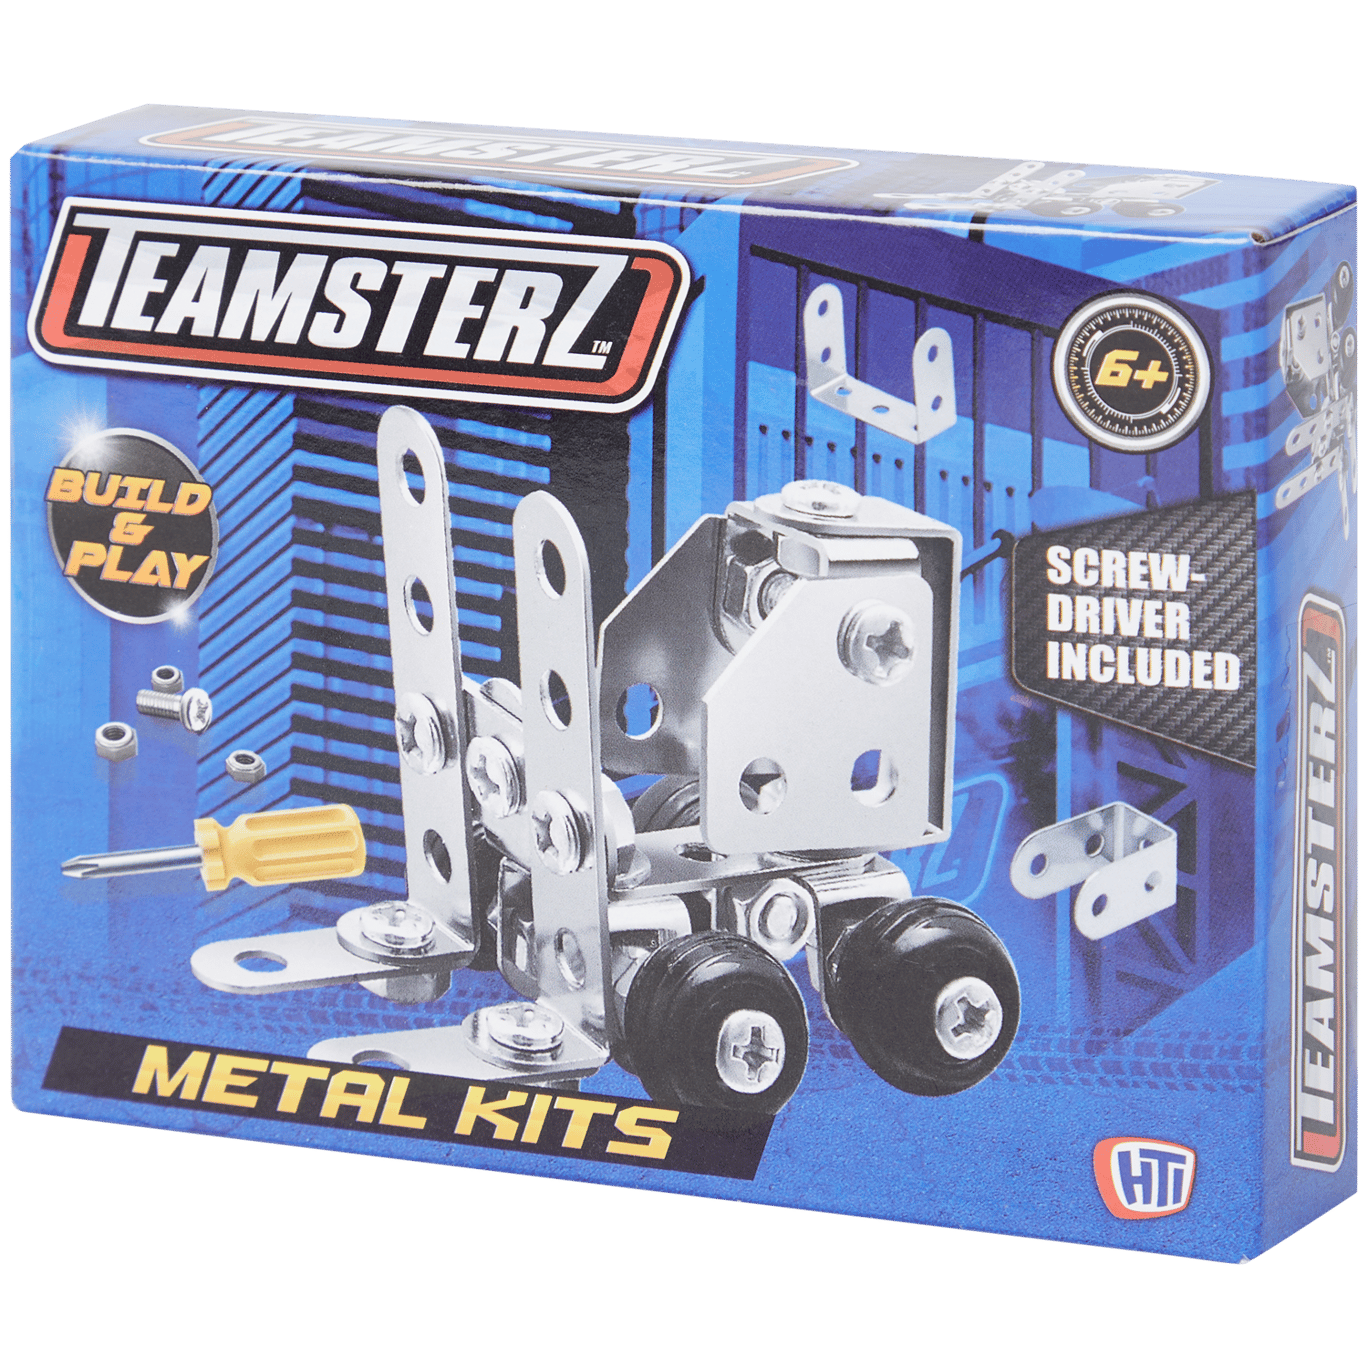 Kit de construção Teamsterz